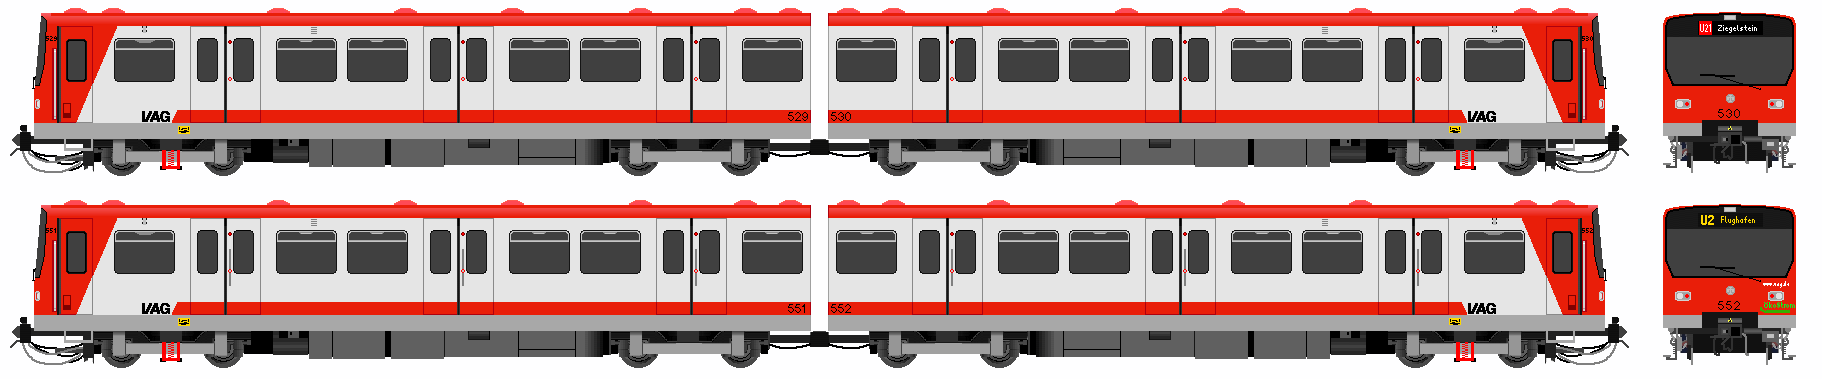 VAG-Baureihe DT2